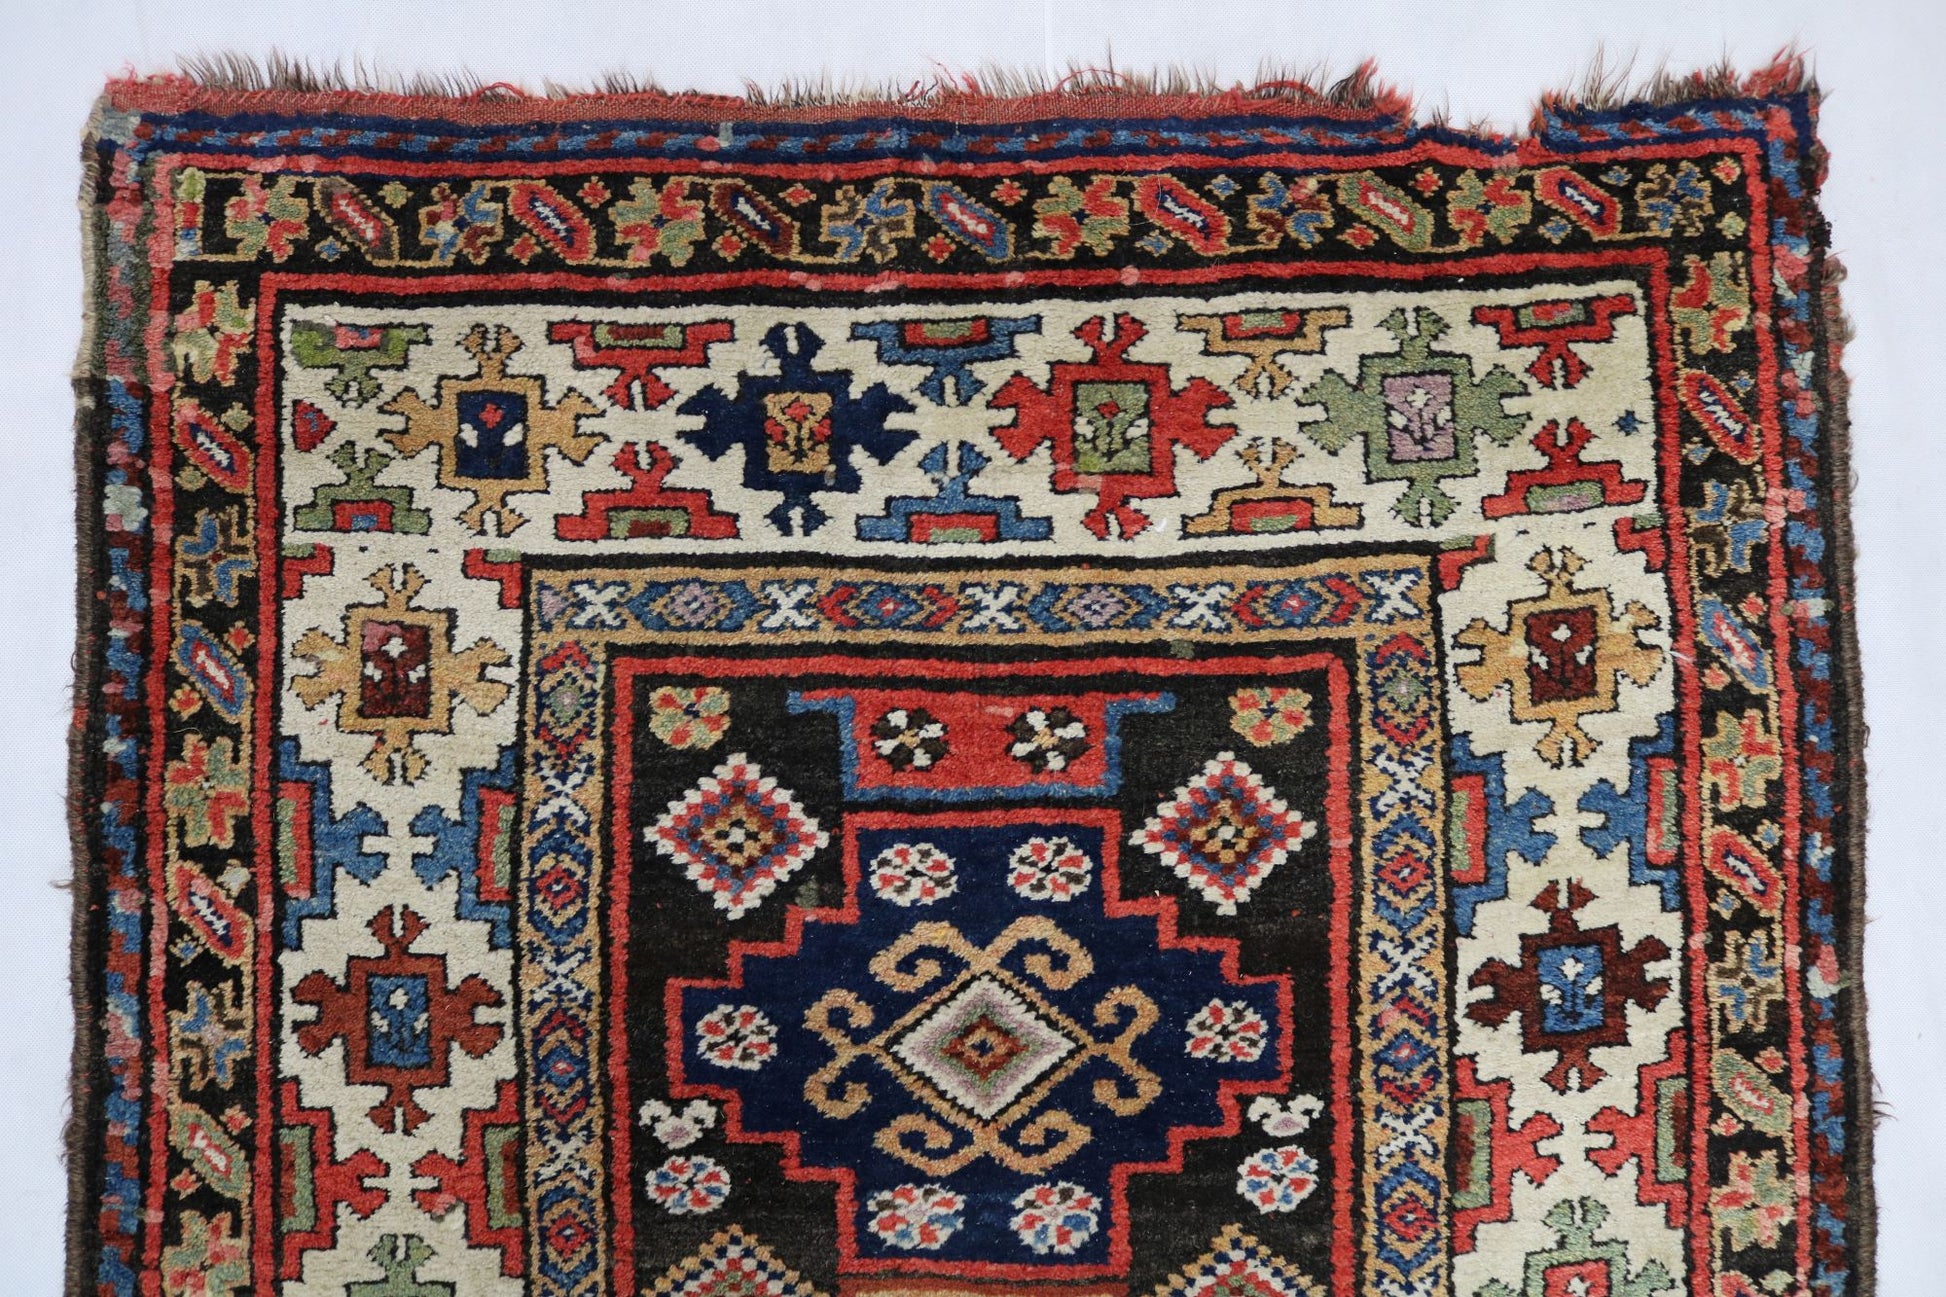 Veramin Antique Rugs and Persian Ferahan Carpets Unite This Room